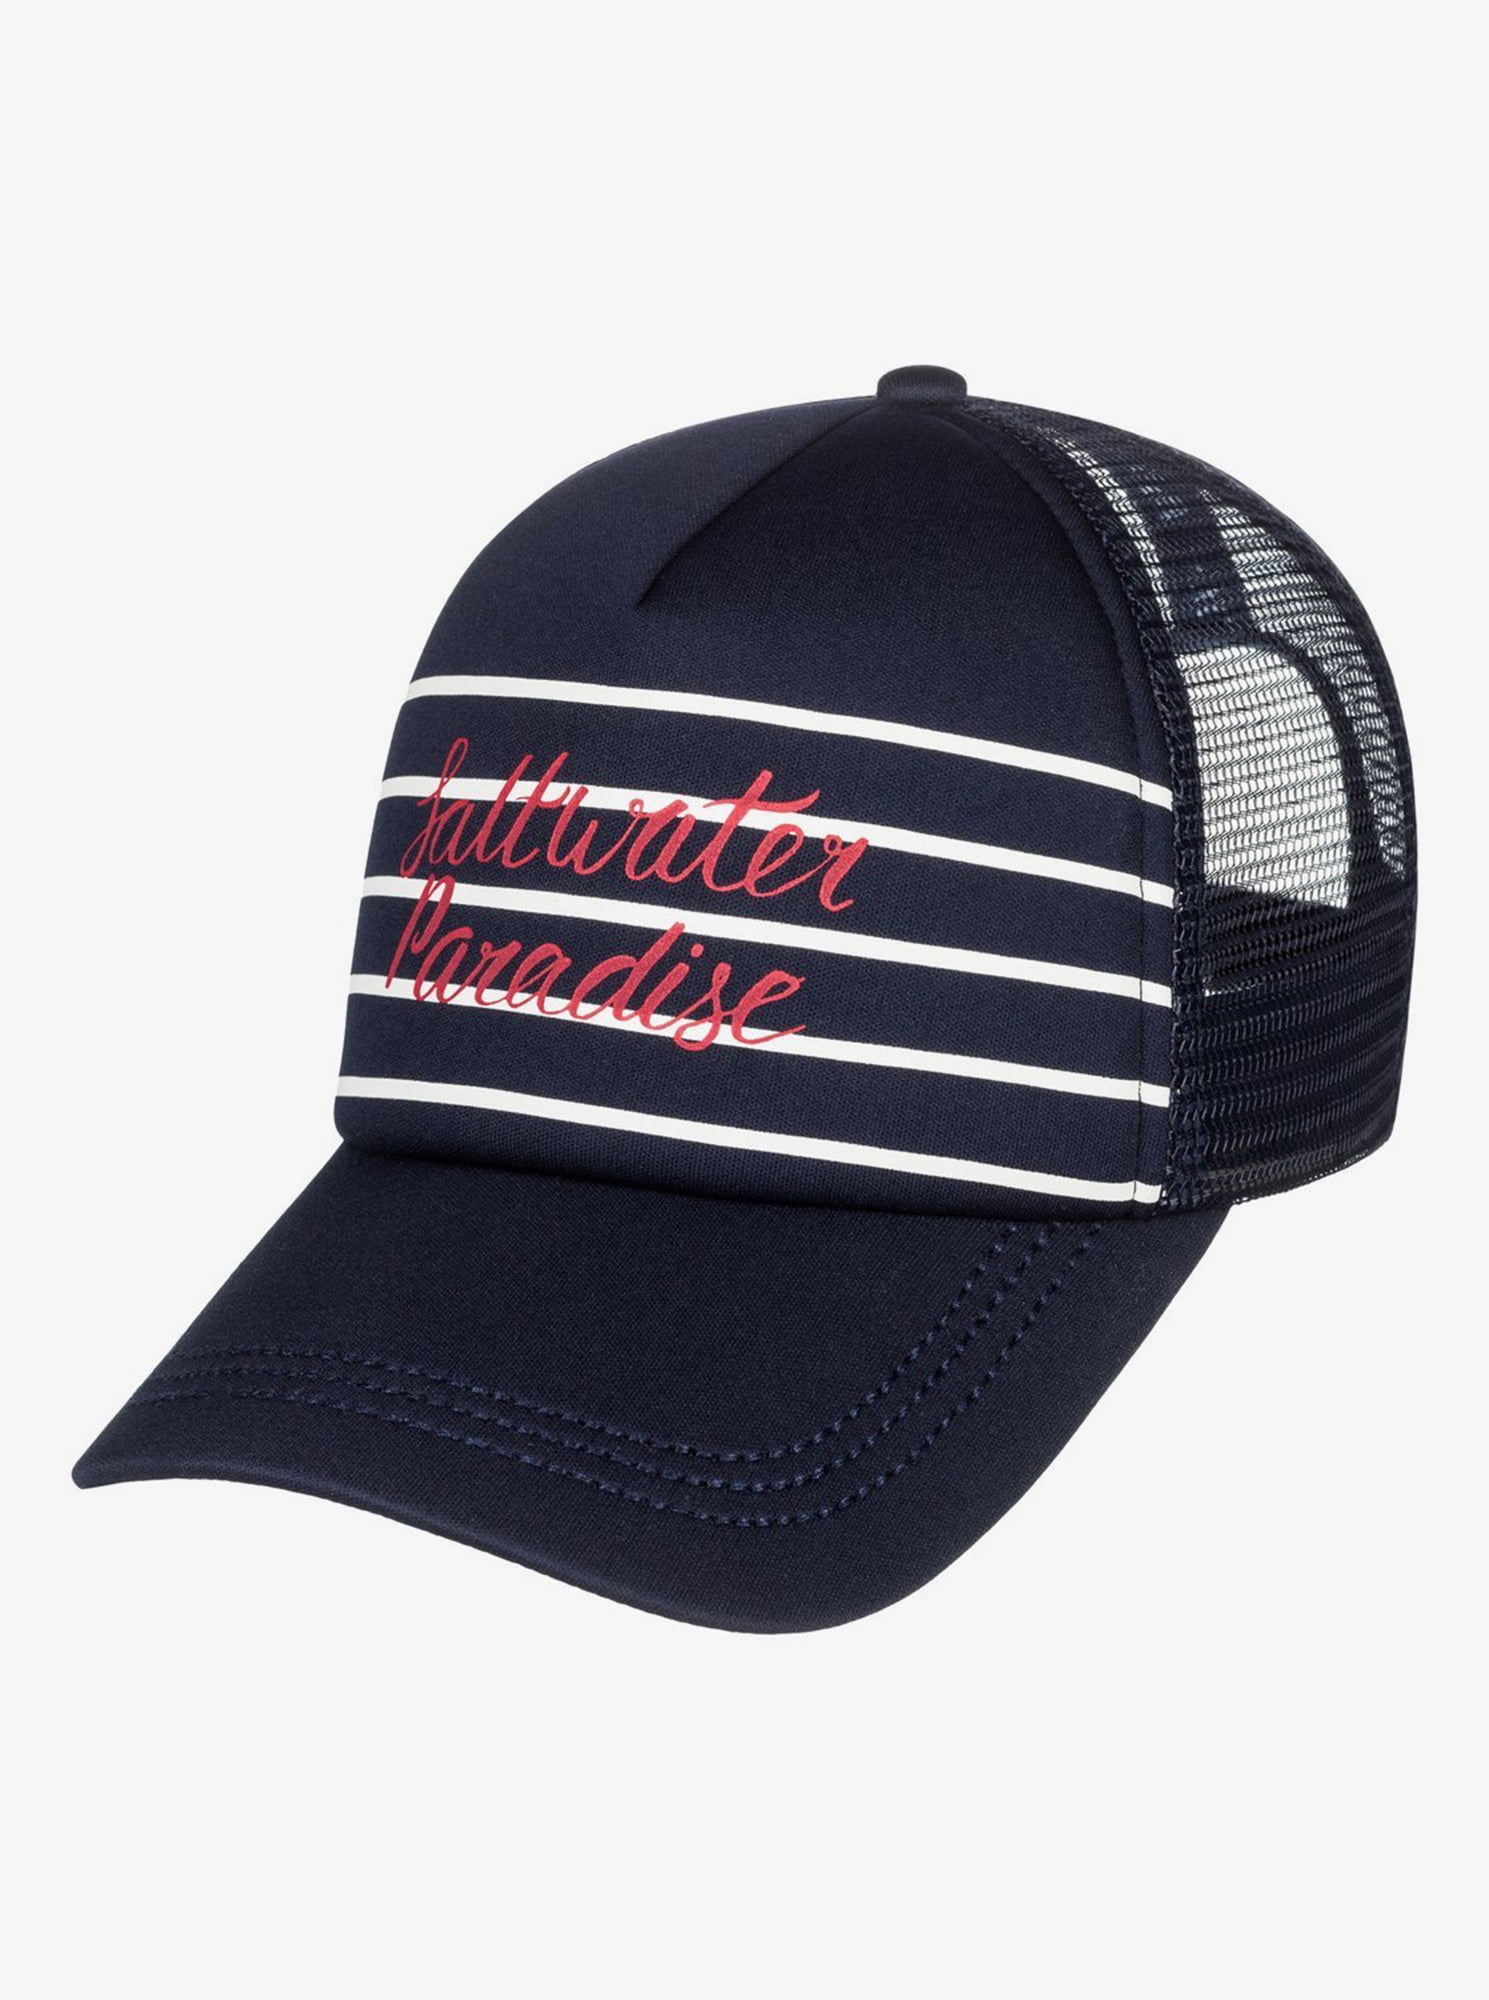 New ROXY Salt Water Paradise Truckin Womens Snapback Trucker Hat Cap 